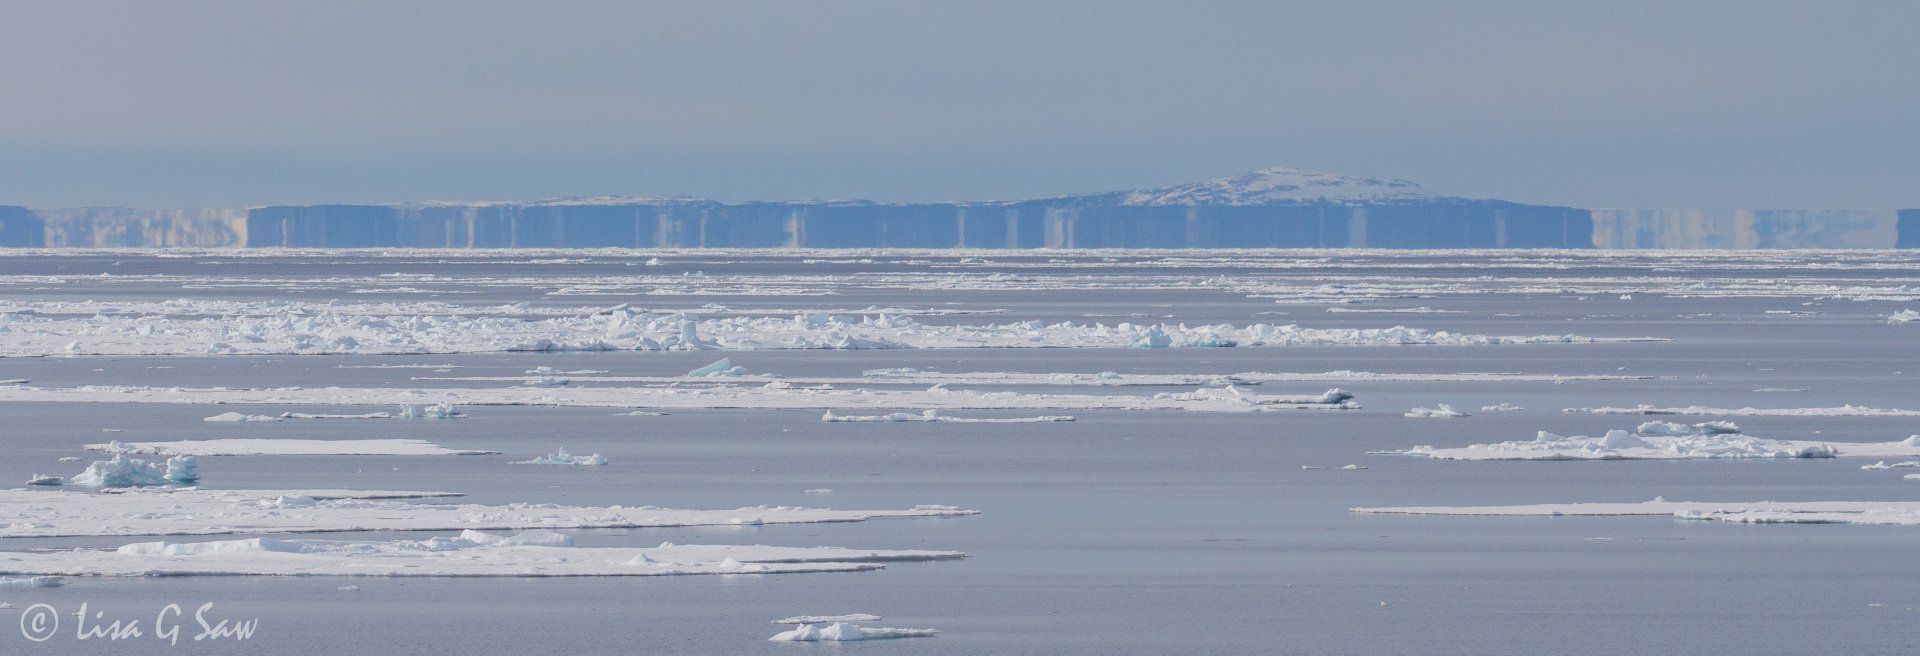 Mirage on horizon beyond Arctic sea ice looking like bar code